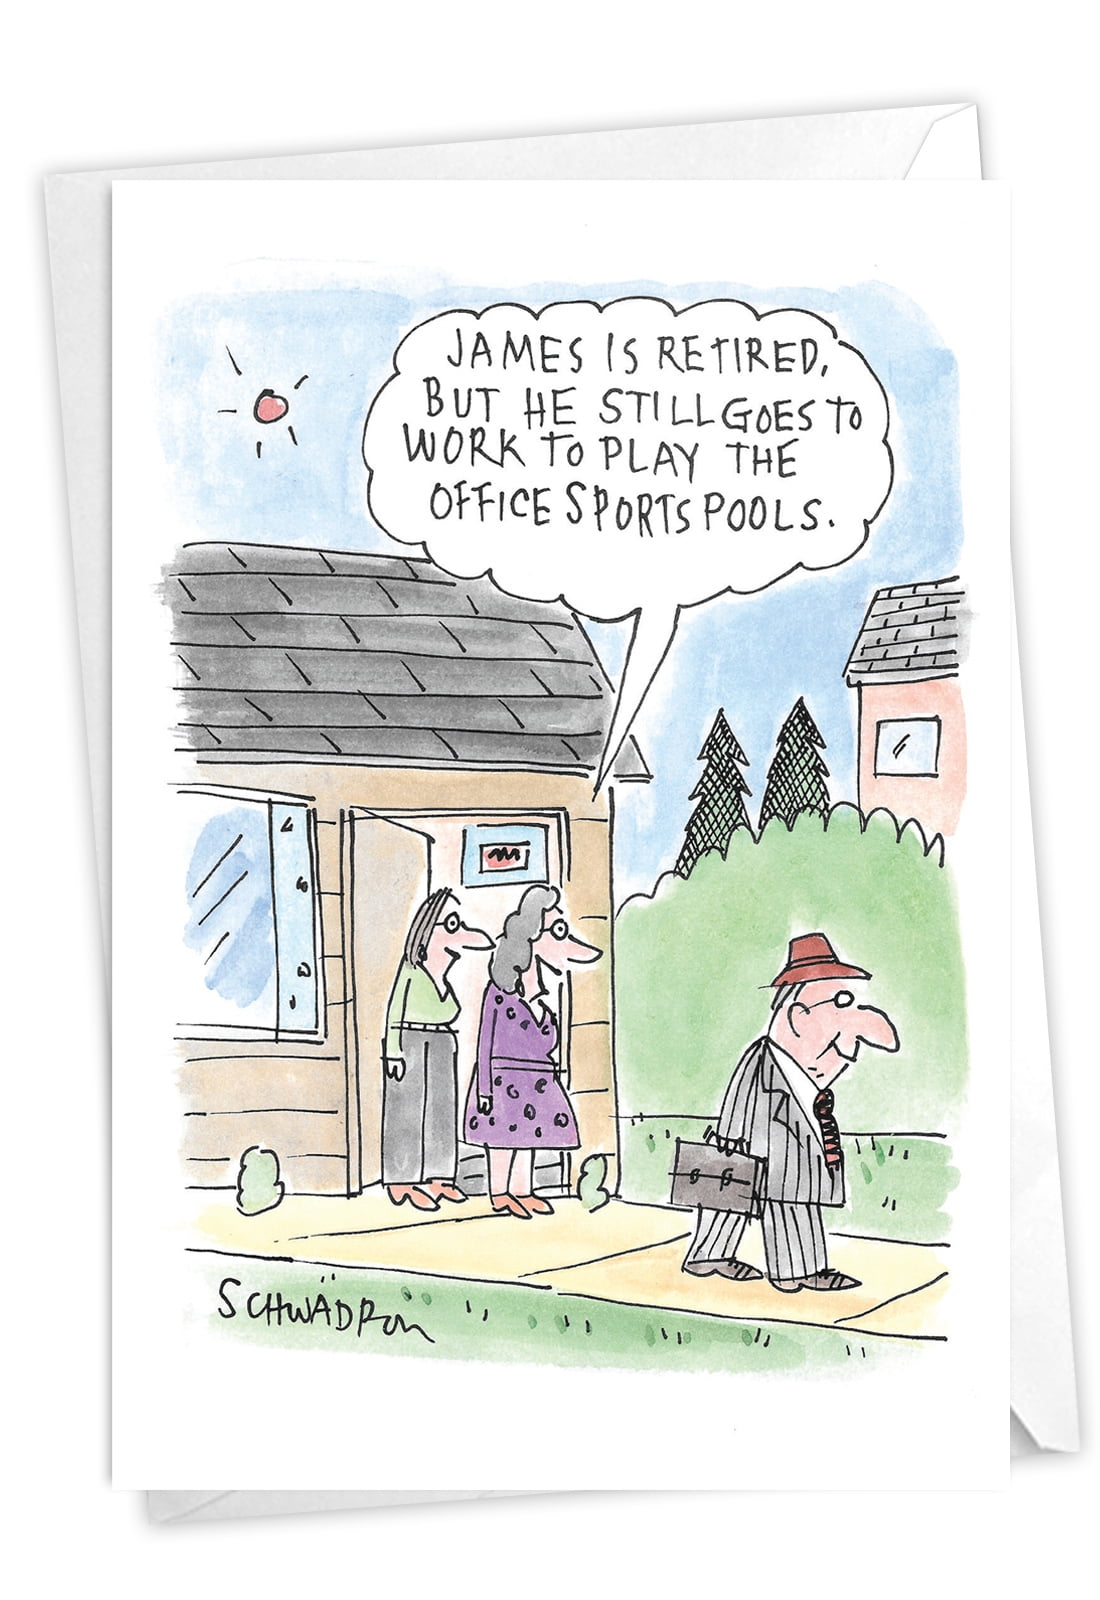 Retirement jokes hilarious funny 